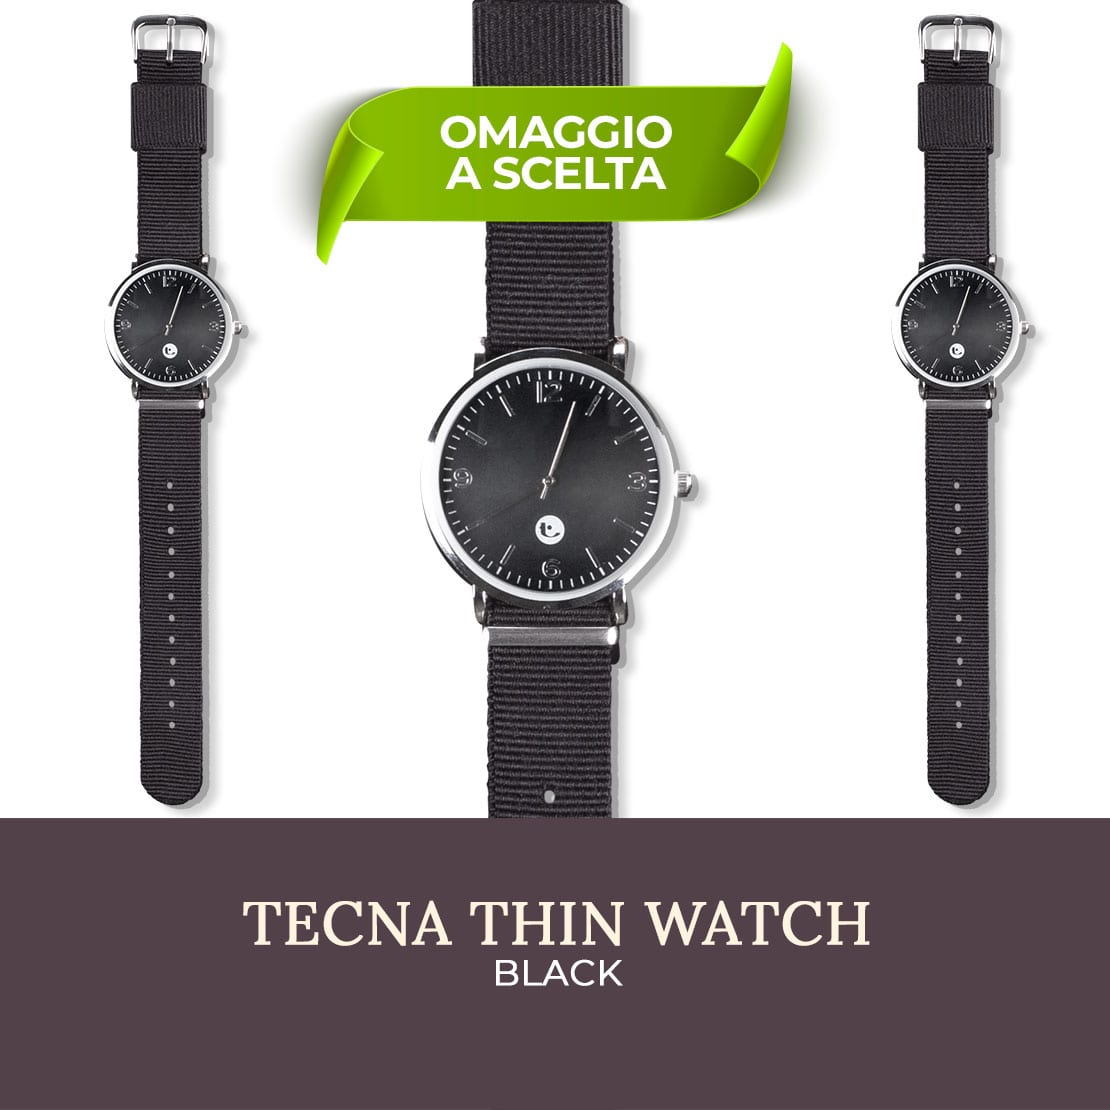 TEC943A TECNA THIN WATCH BLACK